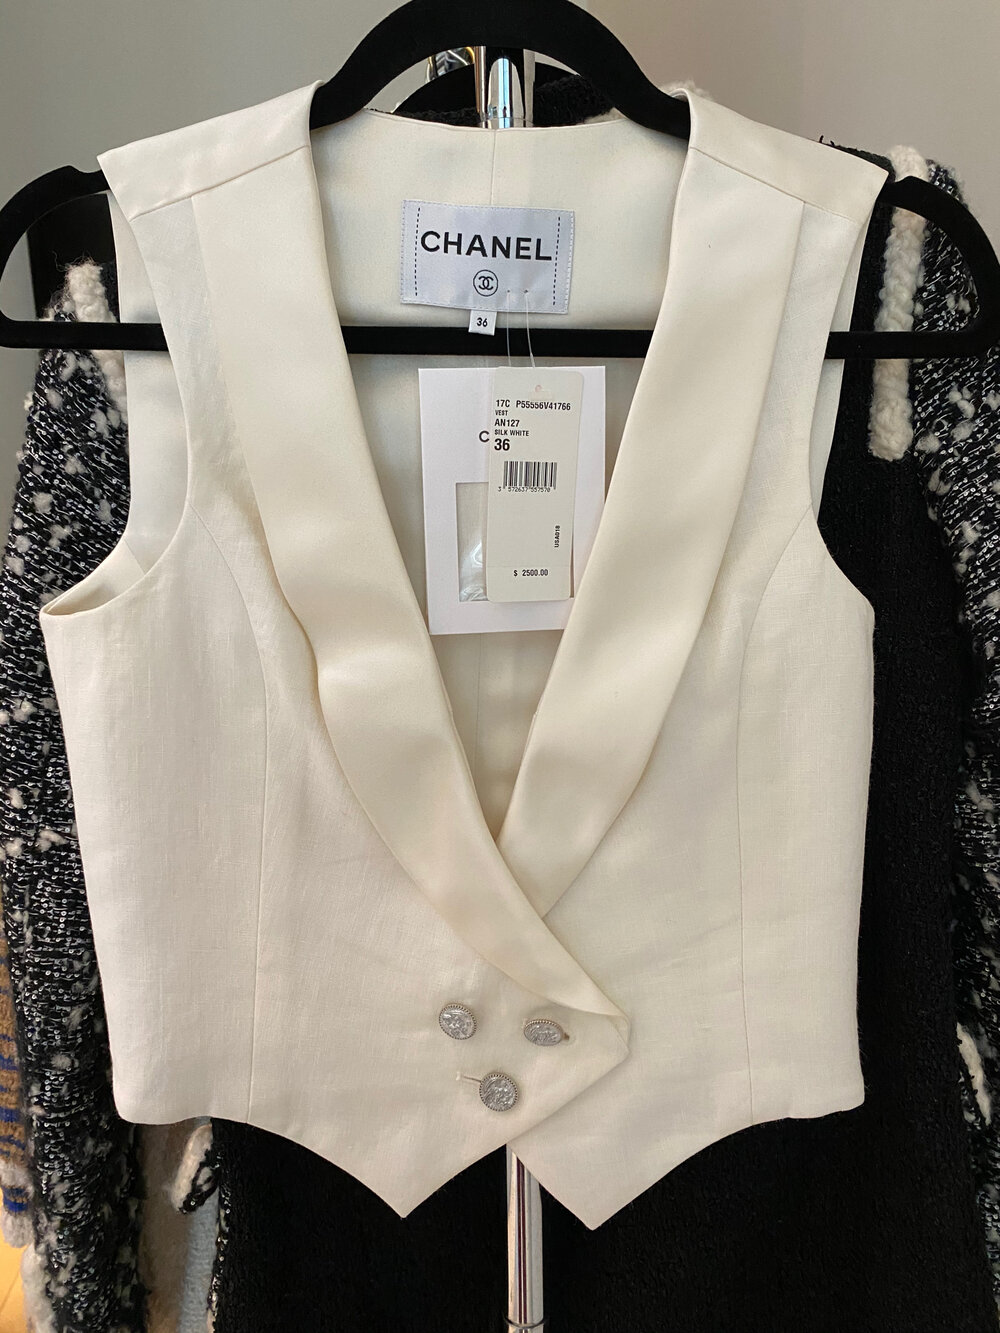 CHANEL Chanel Women's Grey and White Vest, poshbar